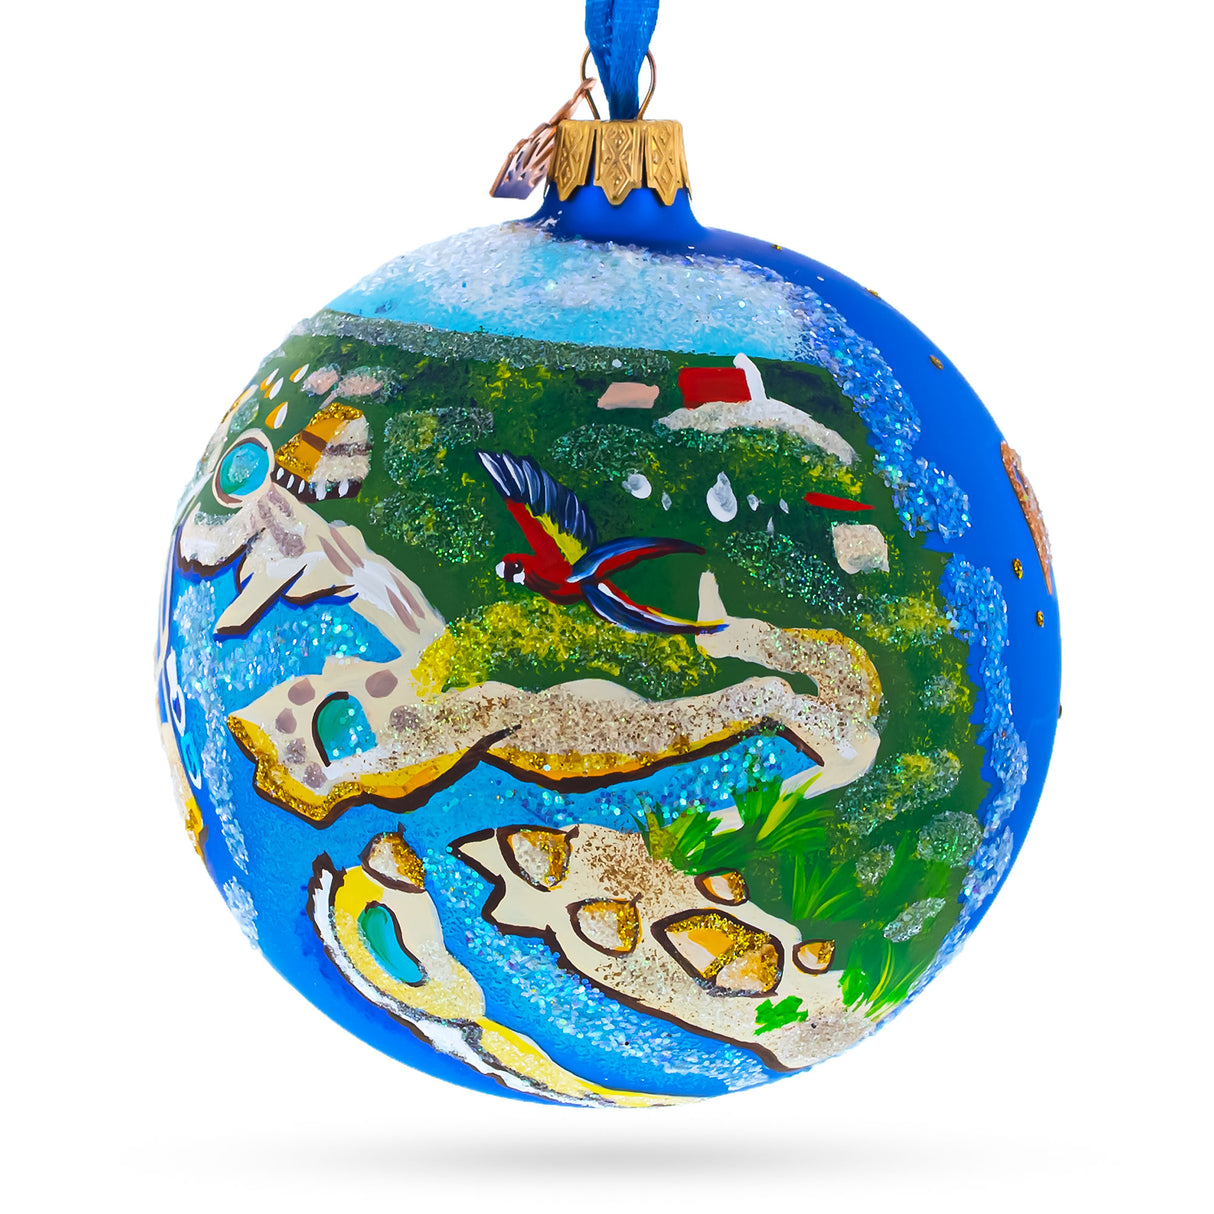 Buy Christmas Ornaments > Travel > North America > Mexico > Playa del Carmen by BestPysanky Online Gift Ship